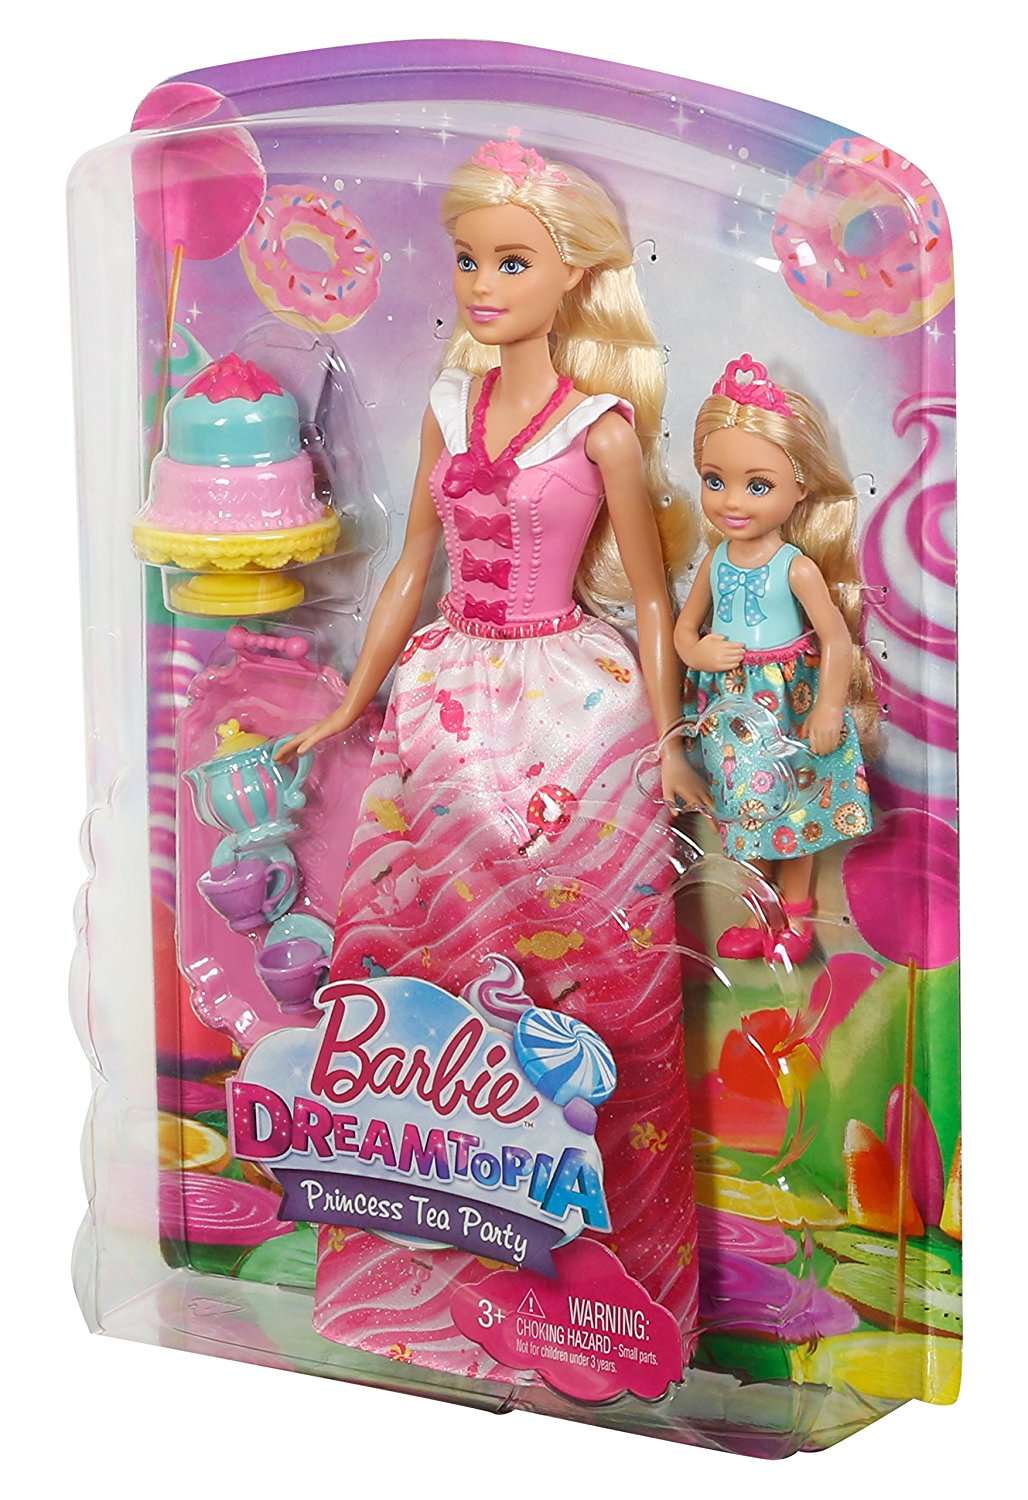 barbie sweetville